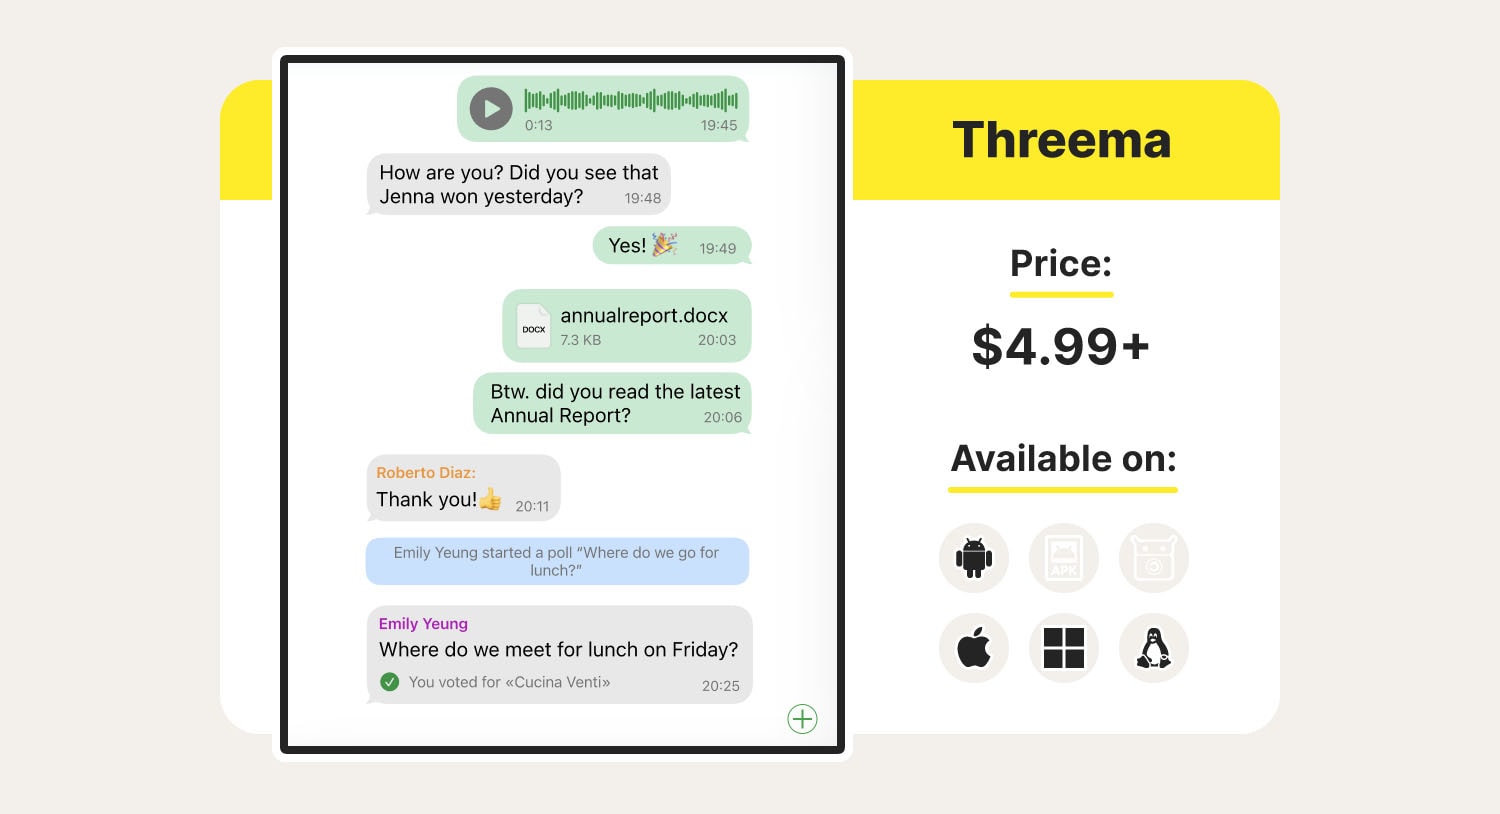 A screenshot showing a conversation between users on the Threema secure messaging platform. 